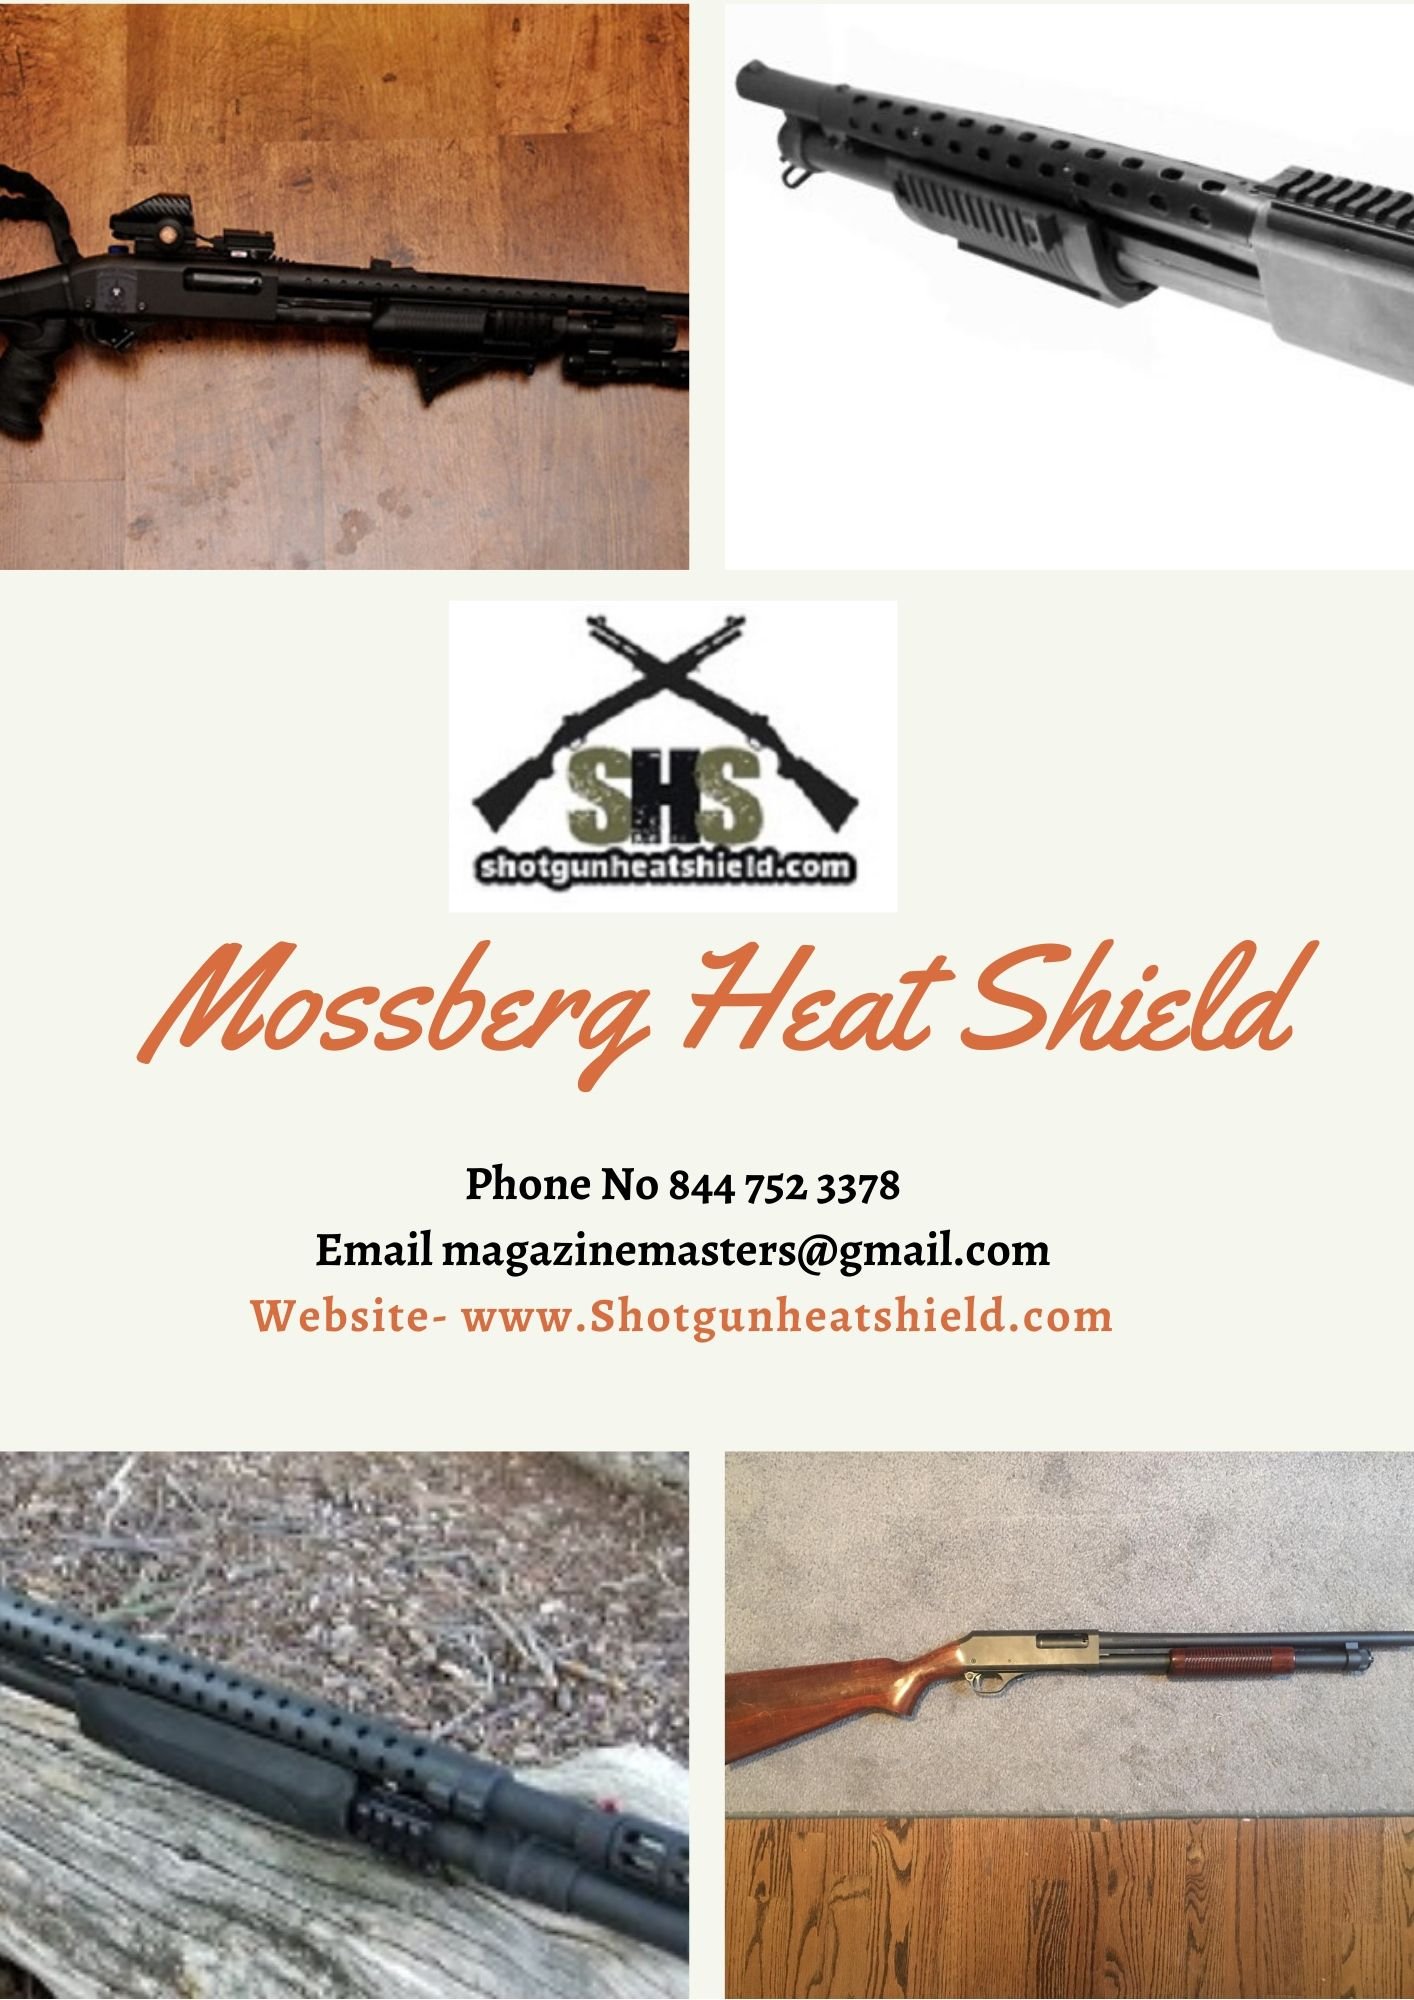 Top Benefits of Mossberg Heat Shield